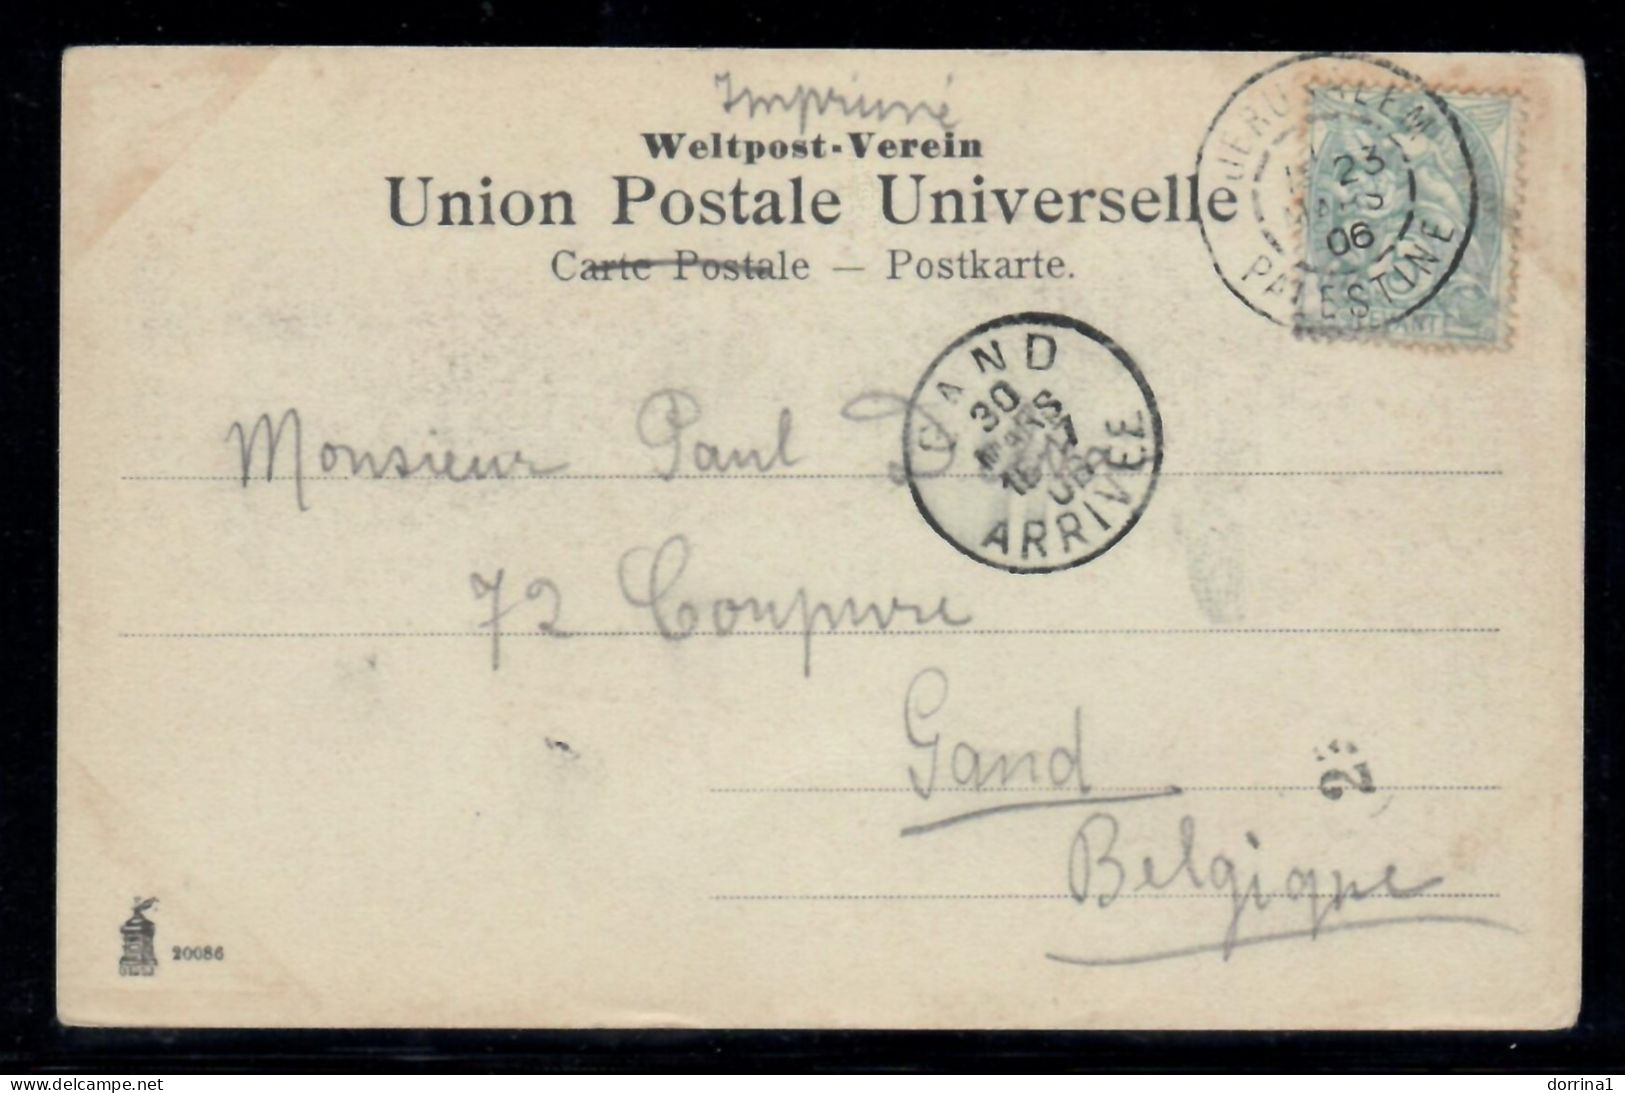 Jerusalem 1906 - France Levant Post Office In Palestine Postcard - Palestine